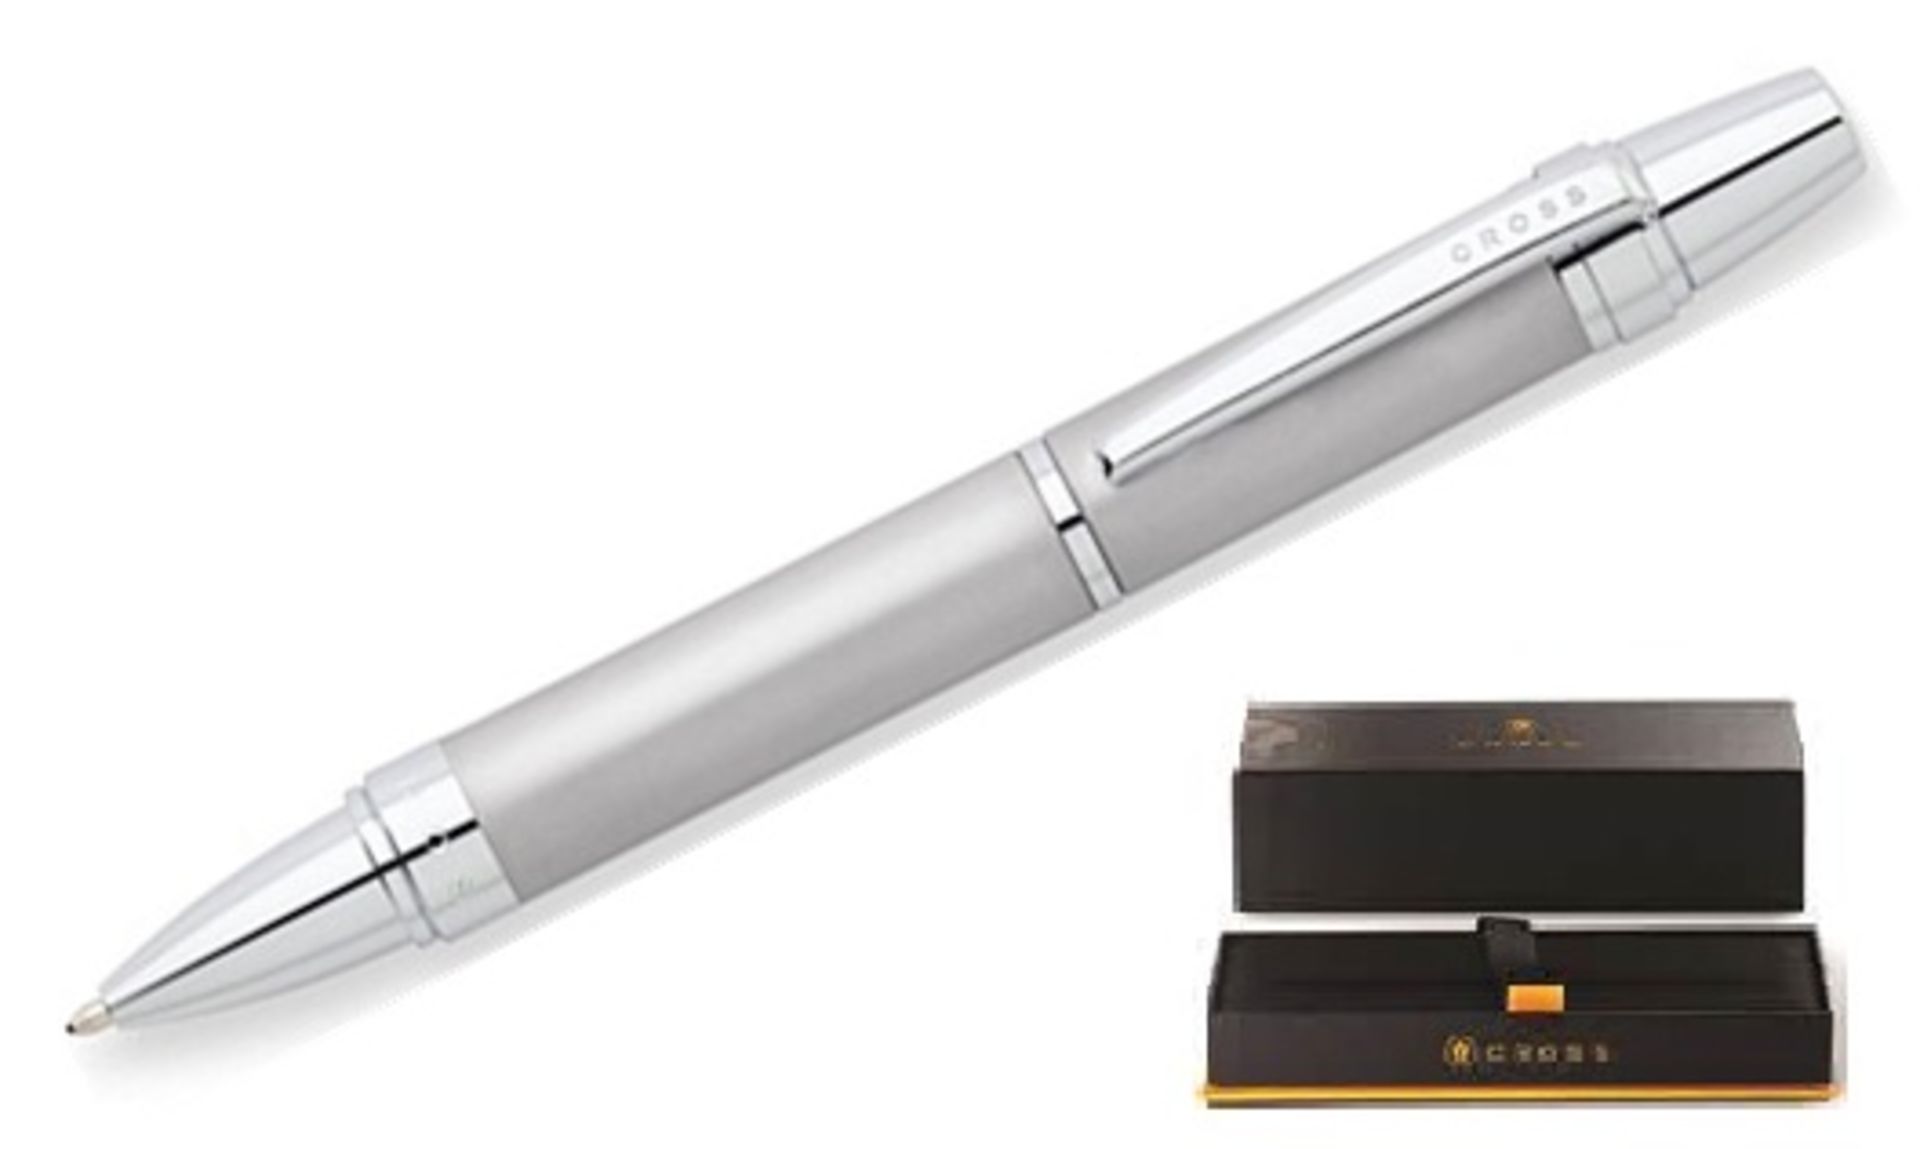 V Brand New Cross Nile Satin Chrome Ballpoint Pen - RRP £25.00 - Amazon Price £17.68